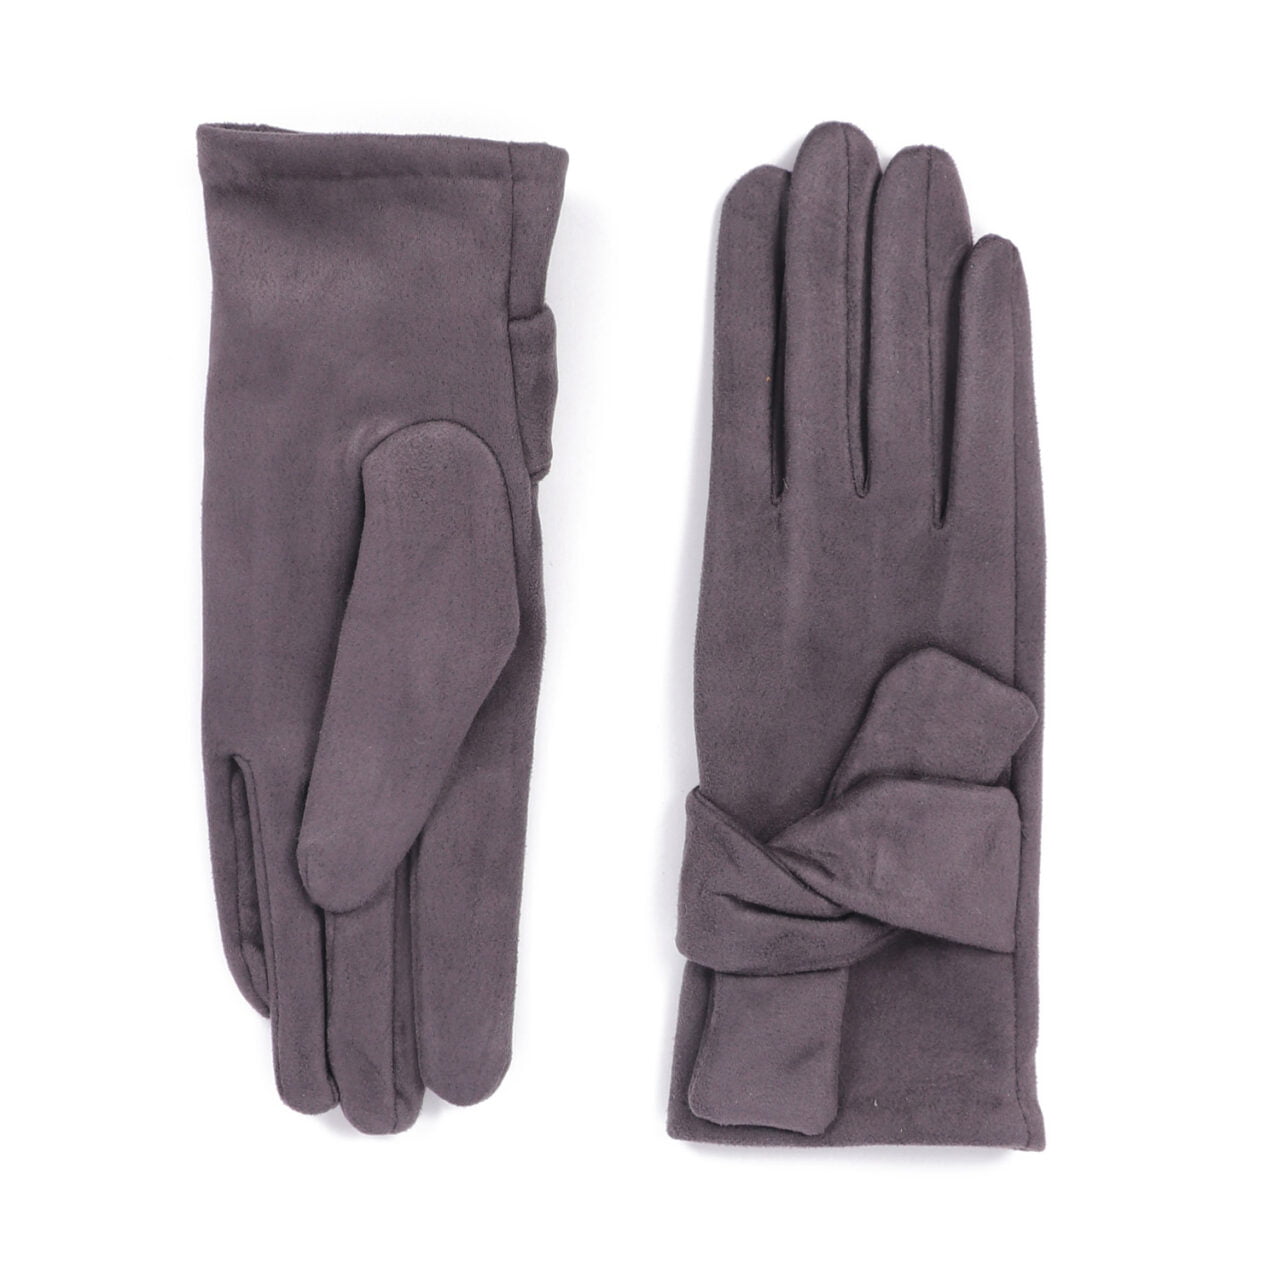 Fab Gifts | Winter Accessories Winter Gloves Alexandra cross-strap Dark Grey by Weirs of Baggot Street